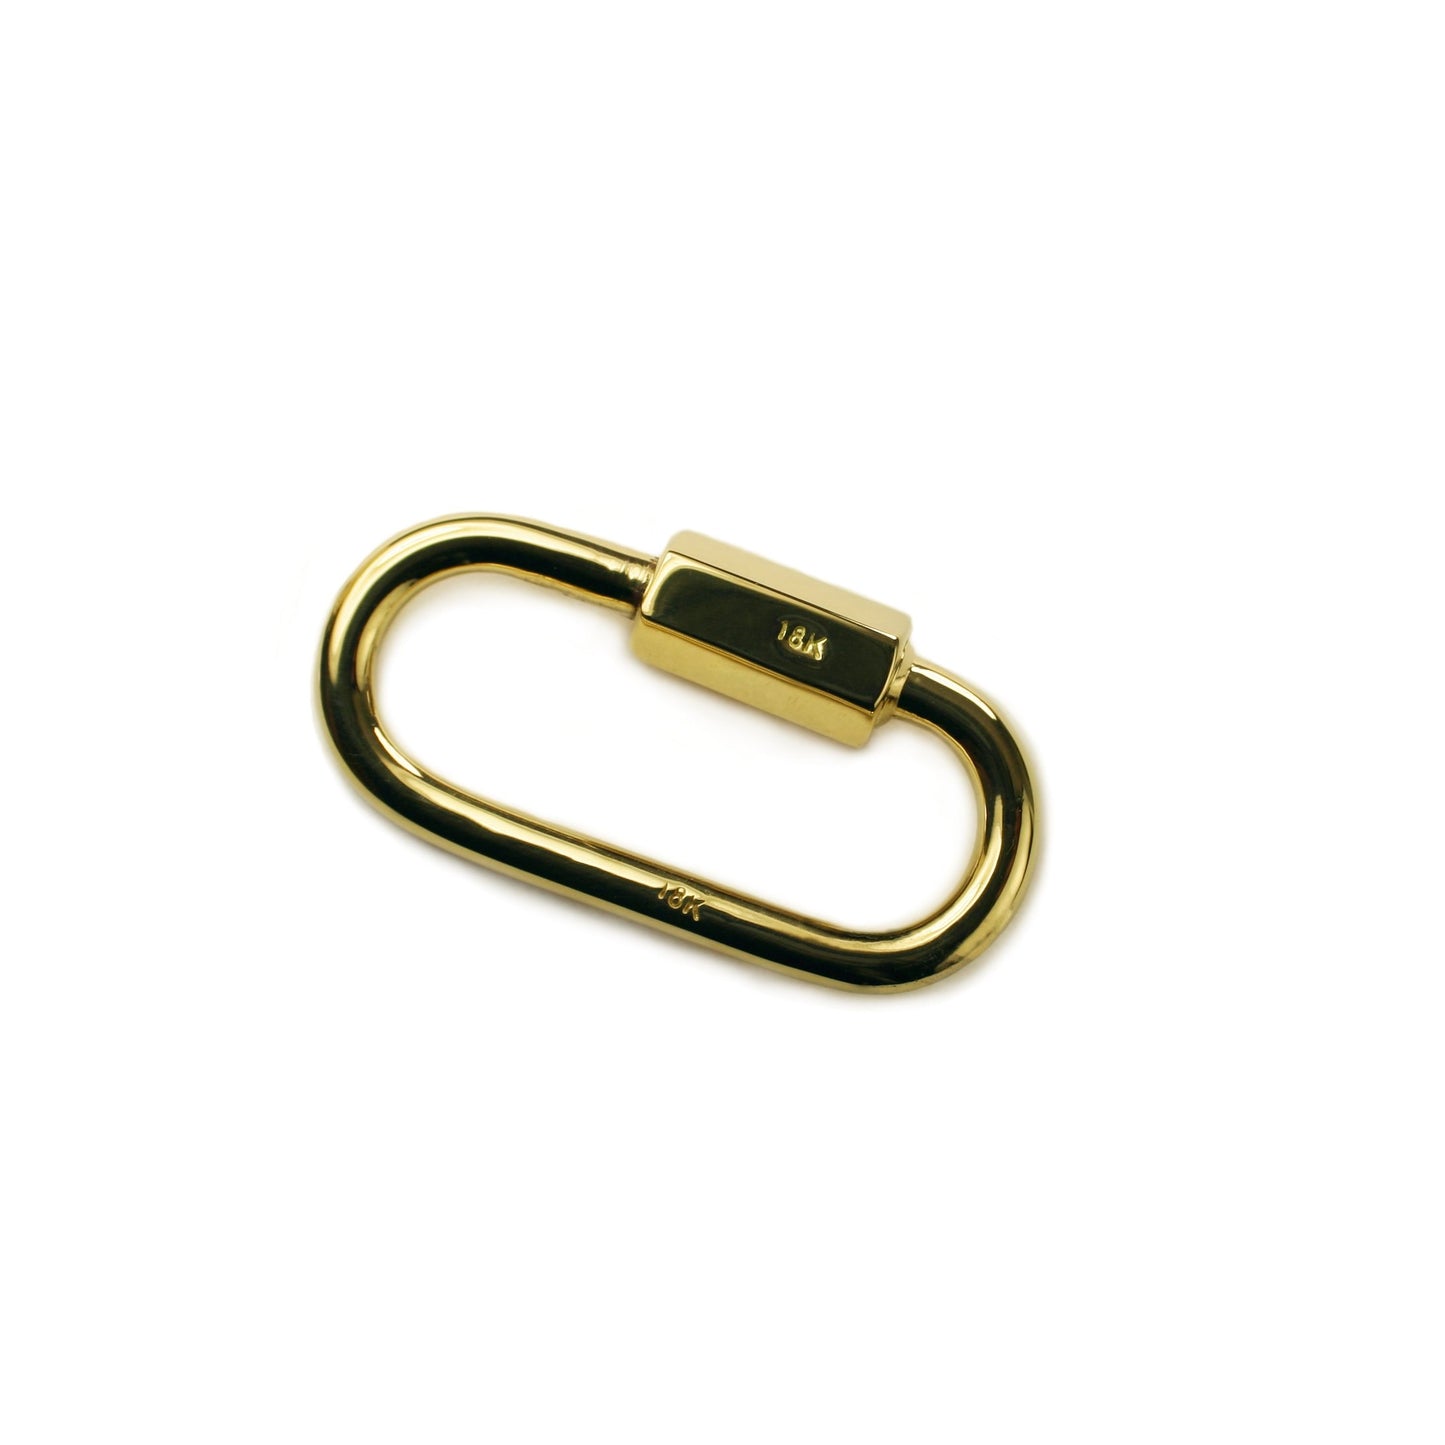 29 mm 18 karat solid gold quick link miniature lock carabiner - closed